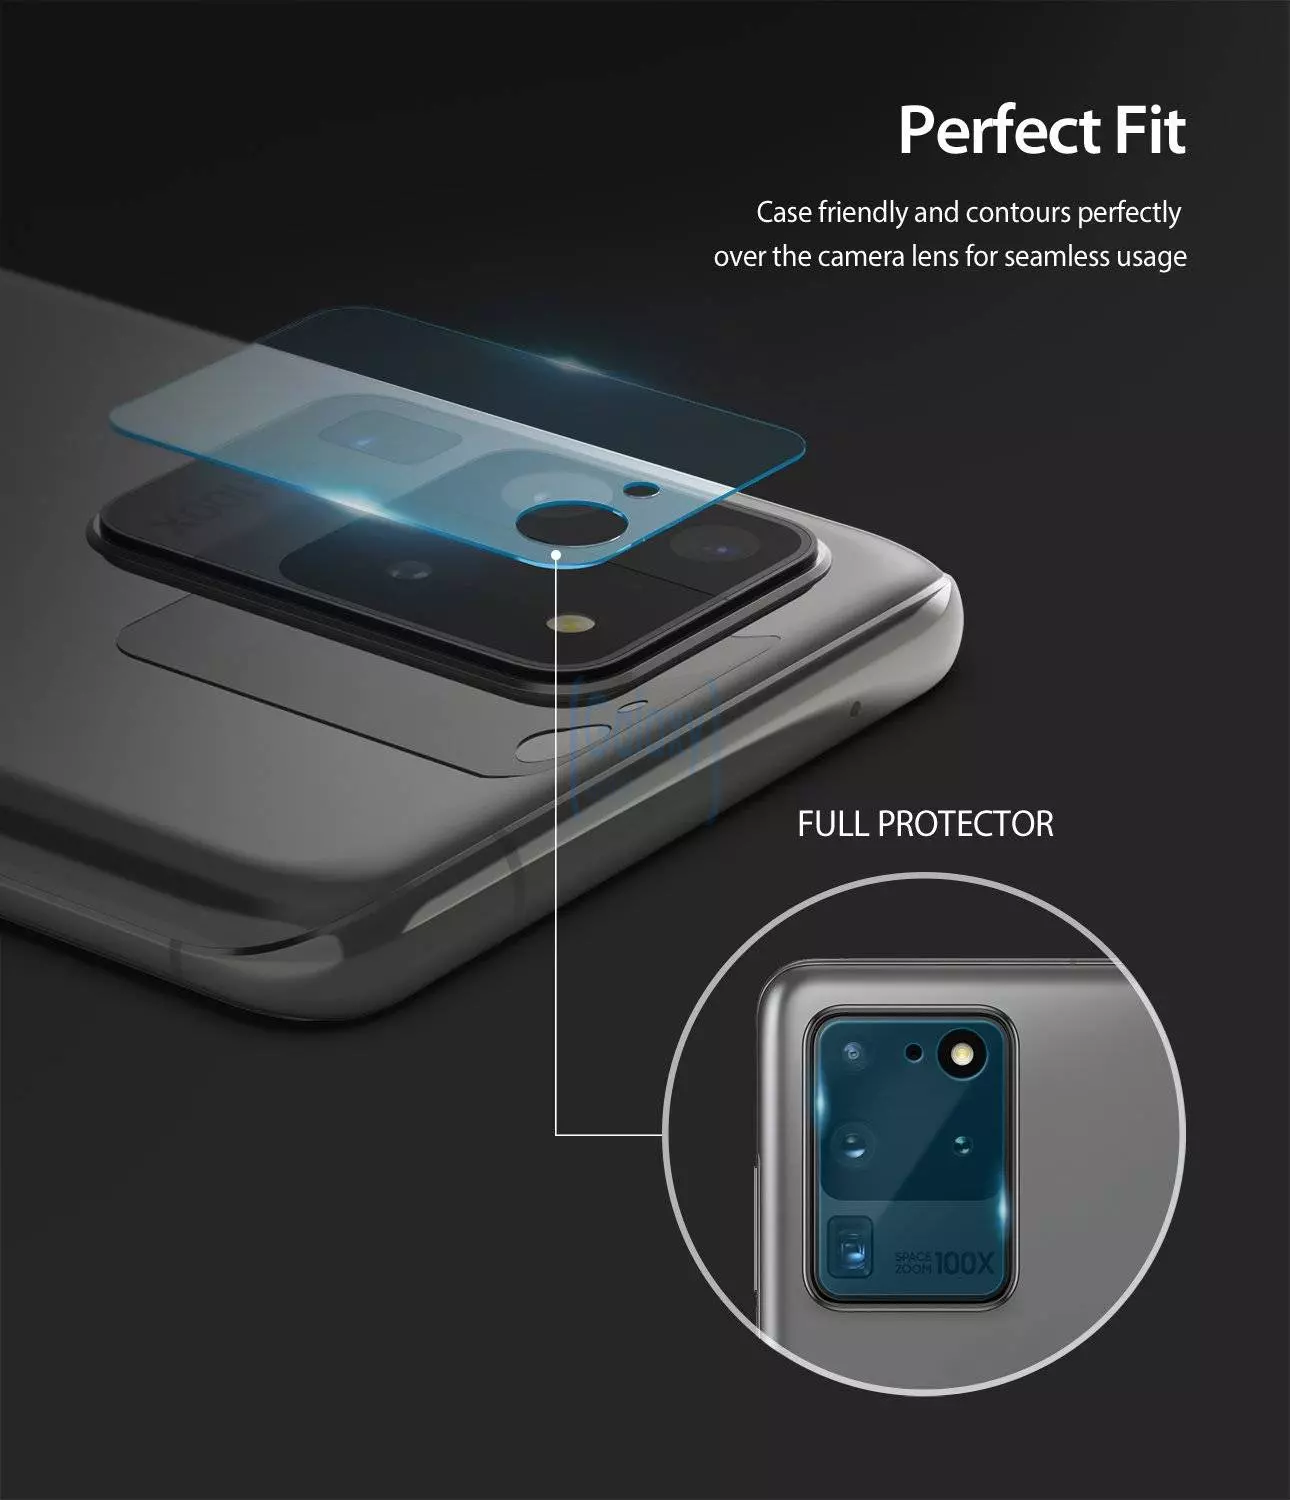 Защитное стекло для камеры Ringke ID GLASS Camera Lens Protector для Samsung Galaxy S20 Ultra